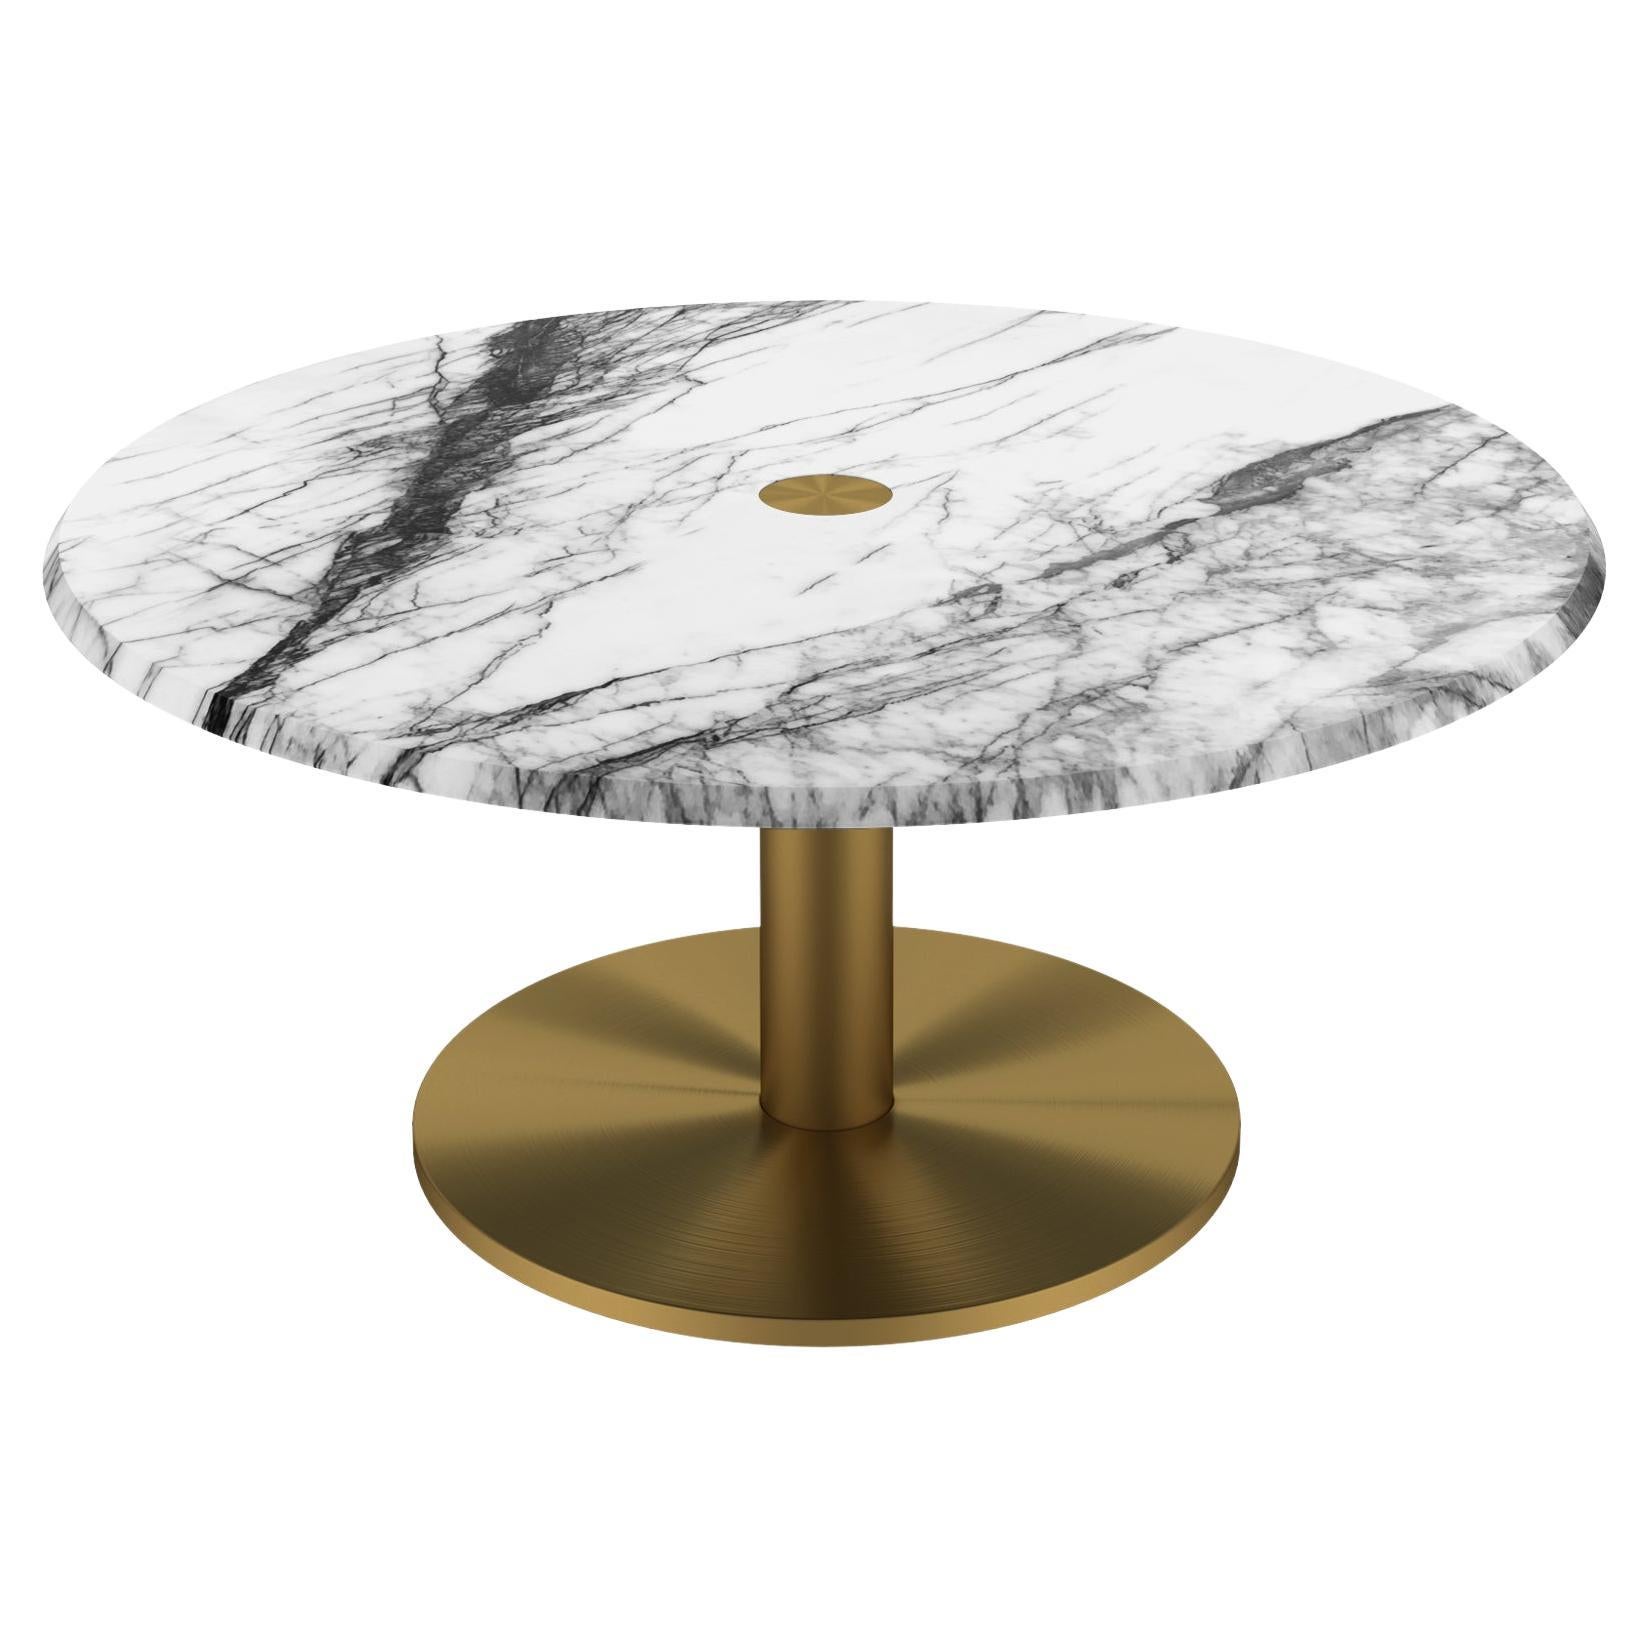 NORDST NOA Coffee Table, Italian White Mountain Marble, Danish Modern Design For Sale